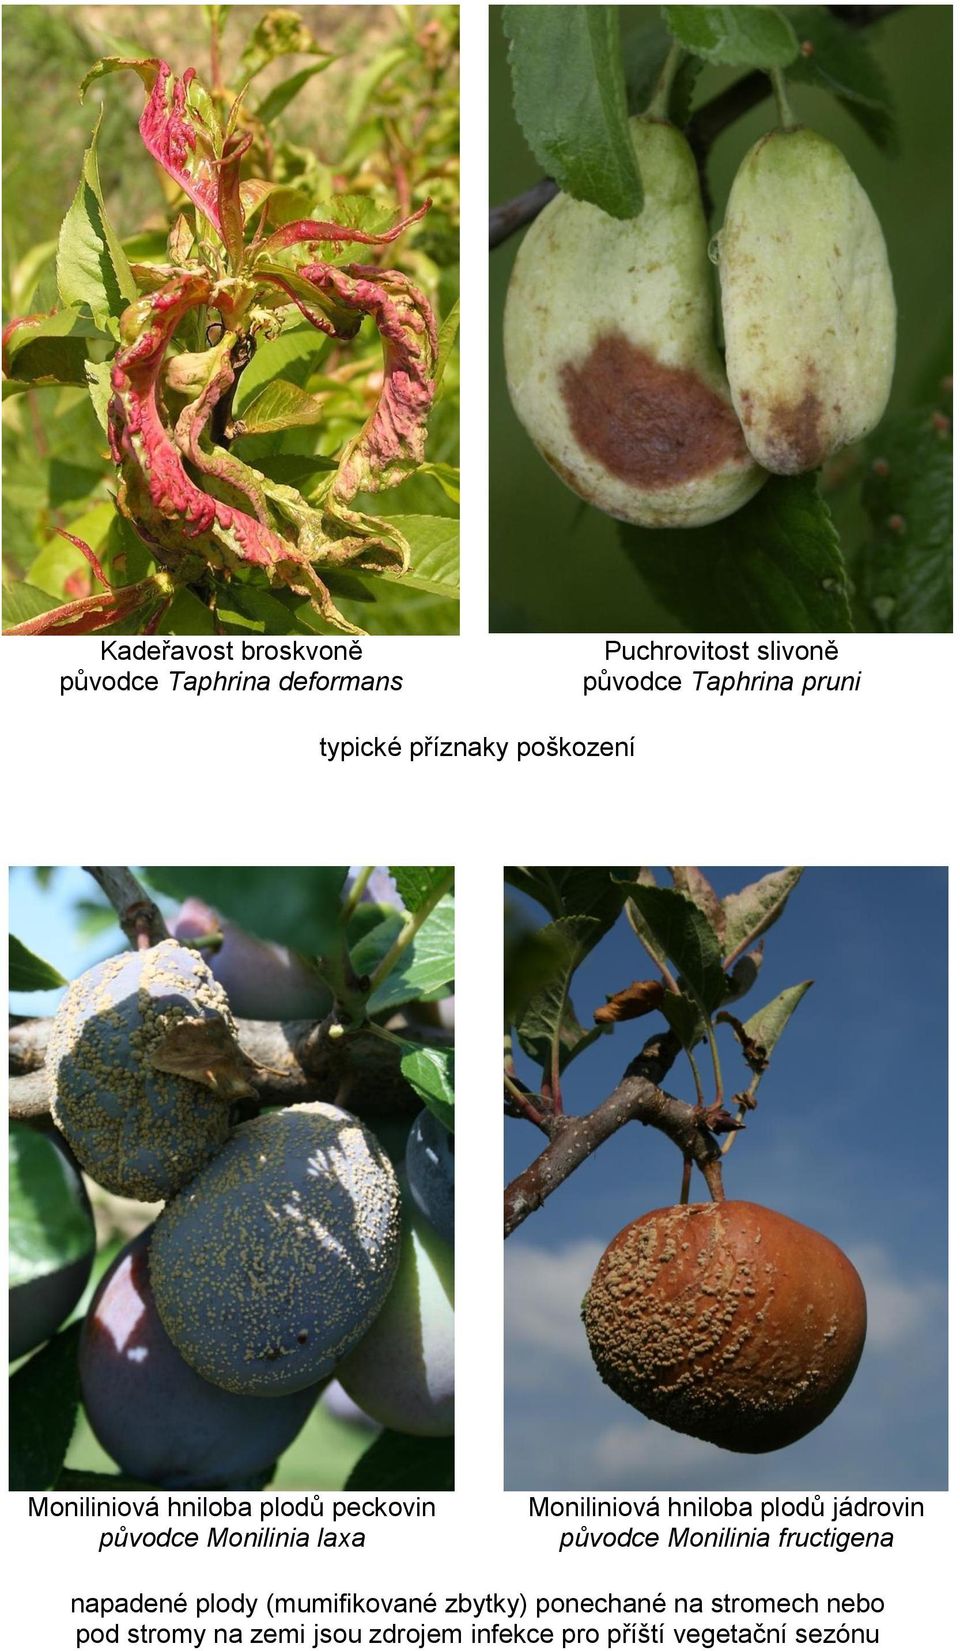 Moniliniová hniloba plodů jádrovin původce Monilinia fructigena napadené plody (mumifikované